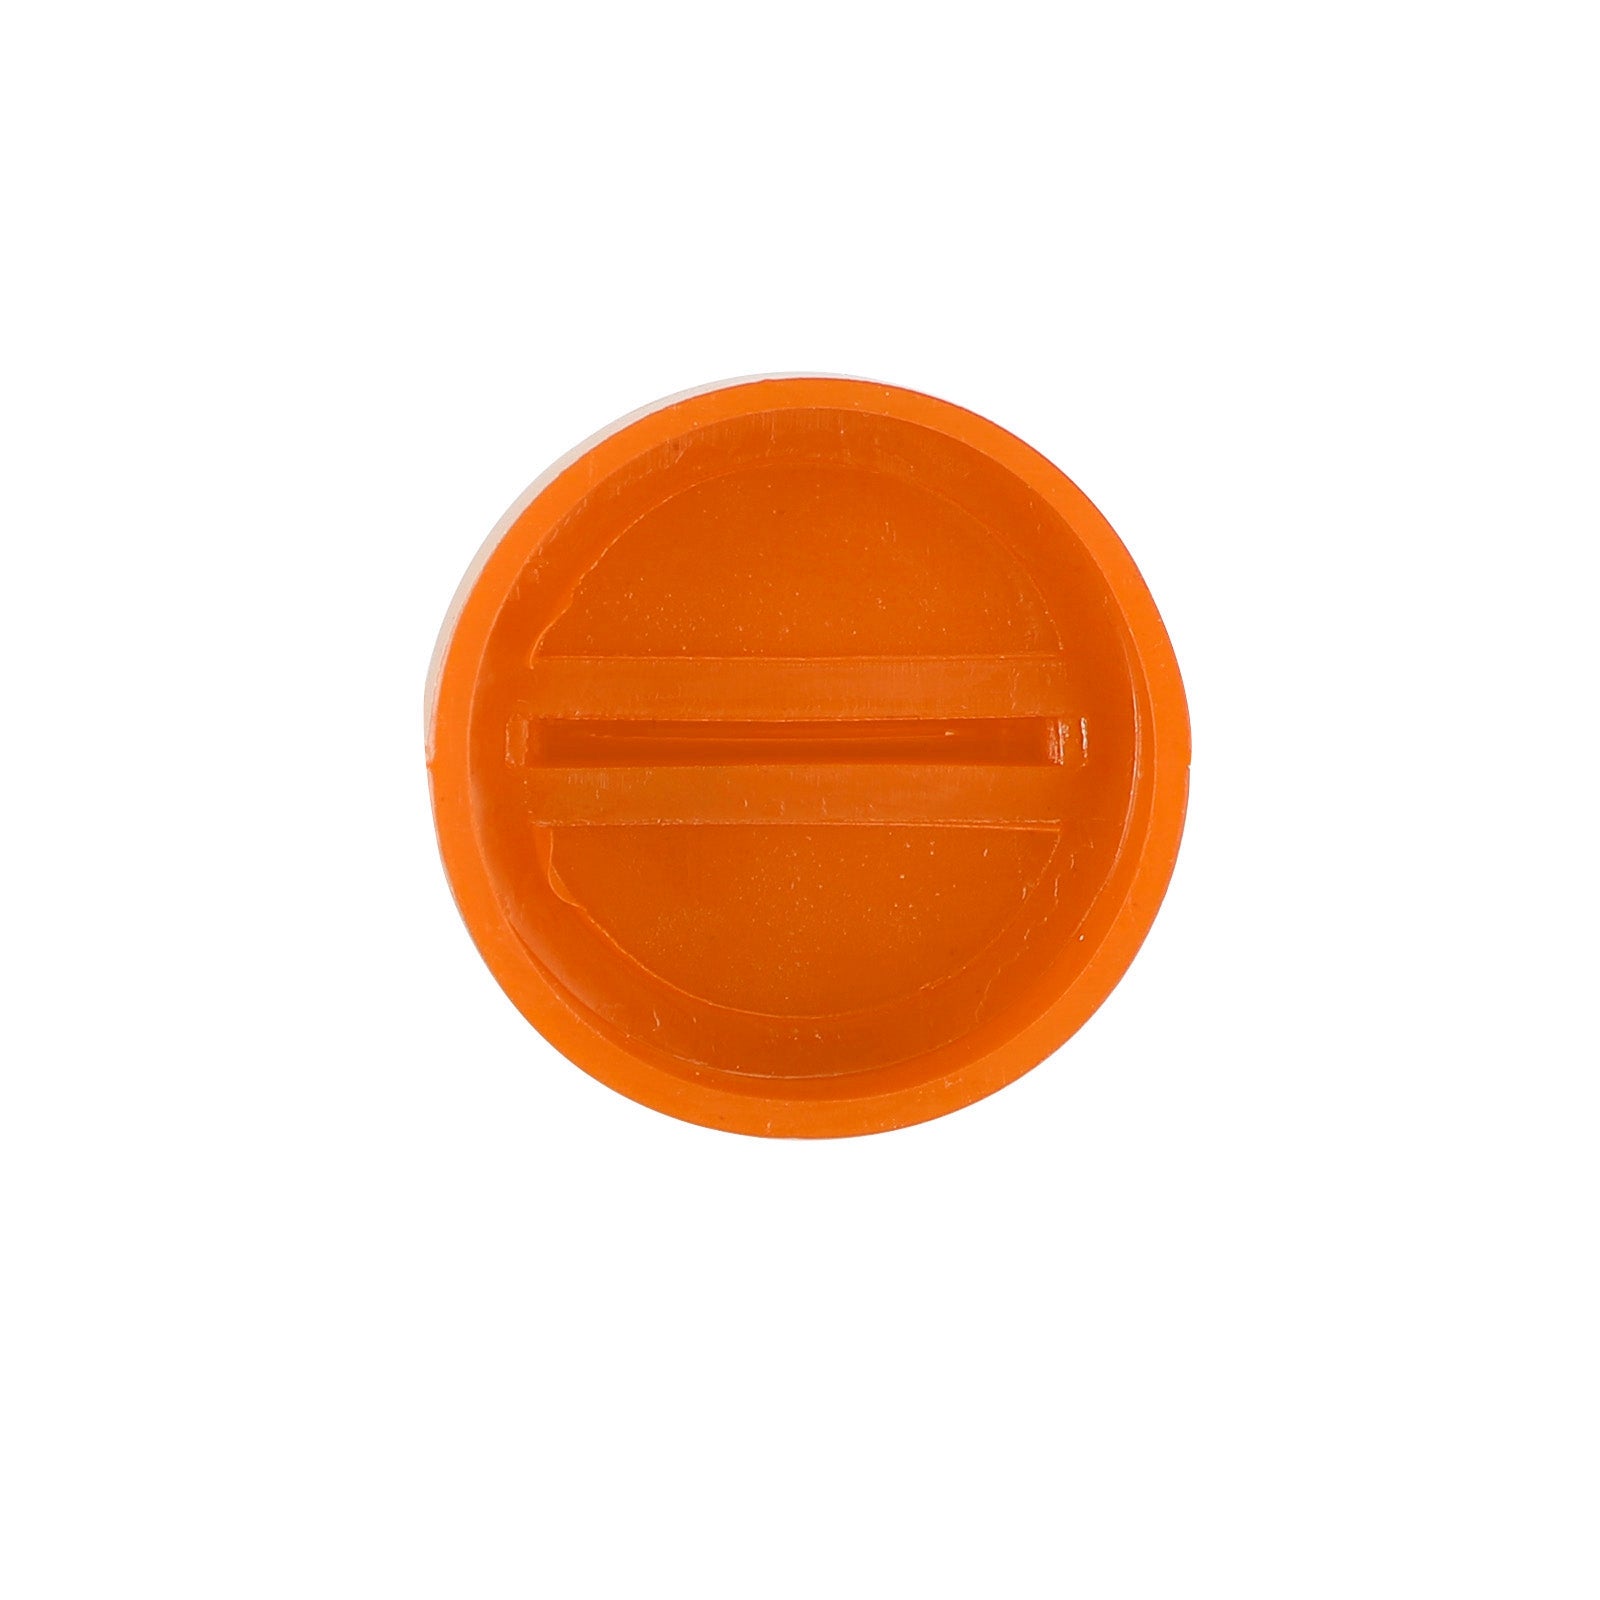 Key Switch Cover Orange For Polaris Sportsman 335 400 450 500 570 800 5433534 Generic